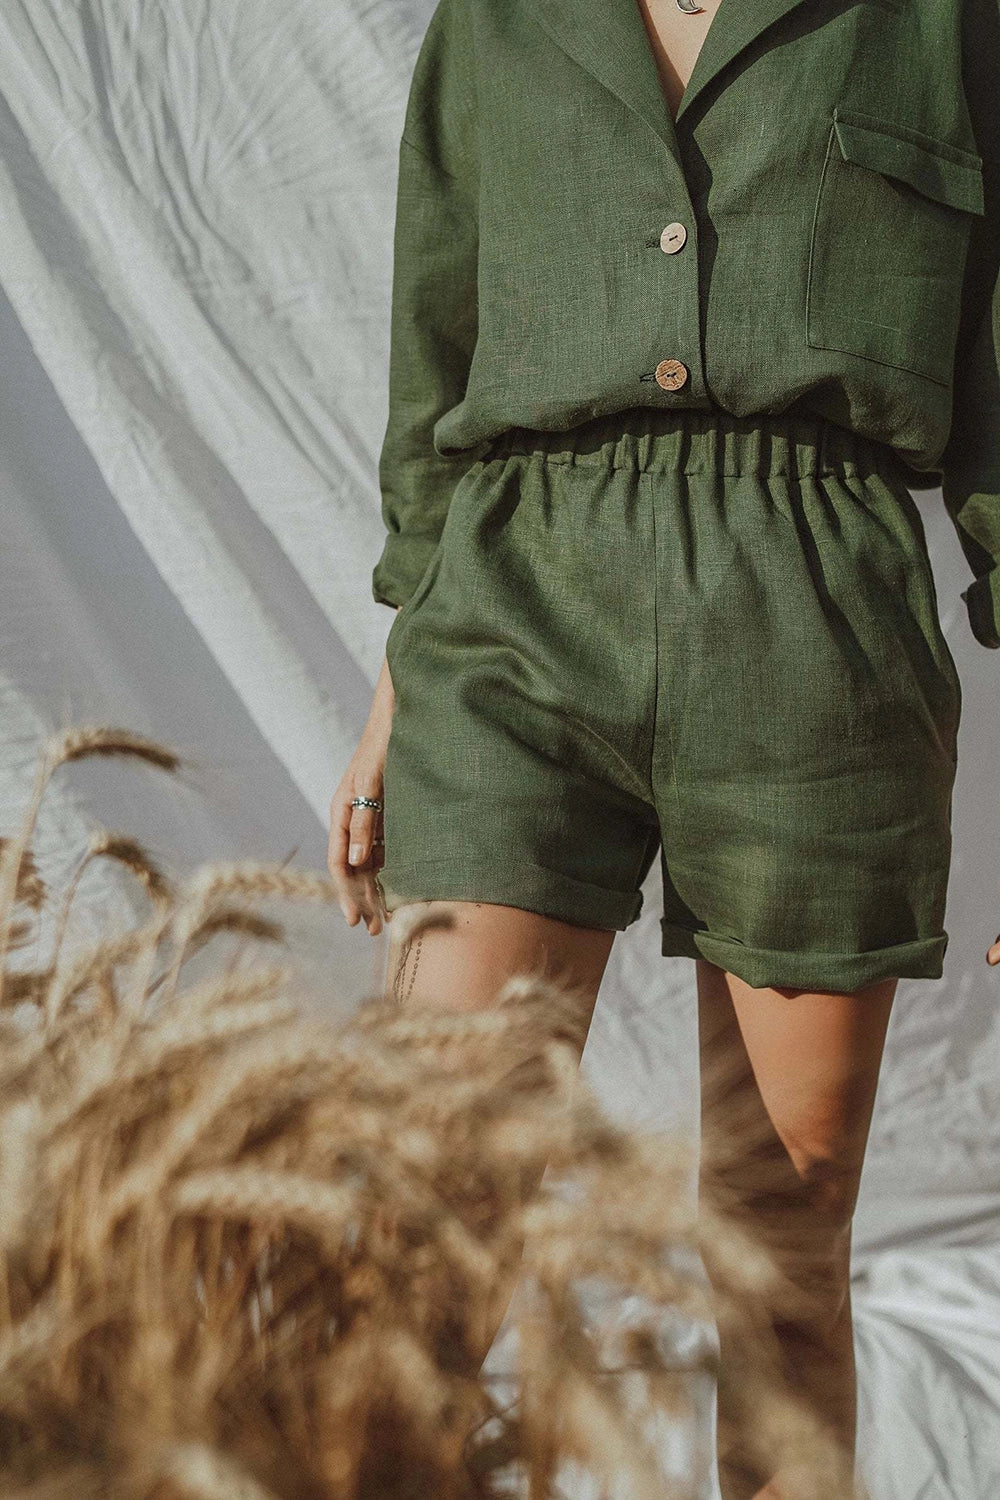 Linen set, green jacket and shorts